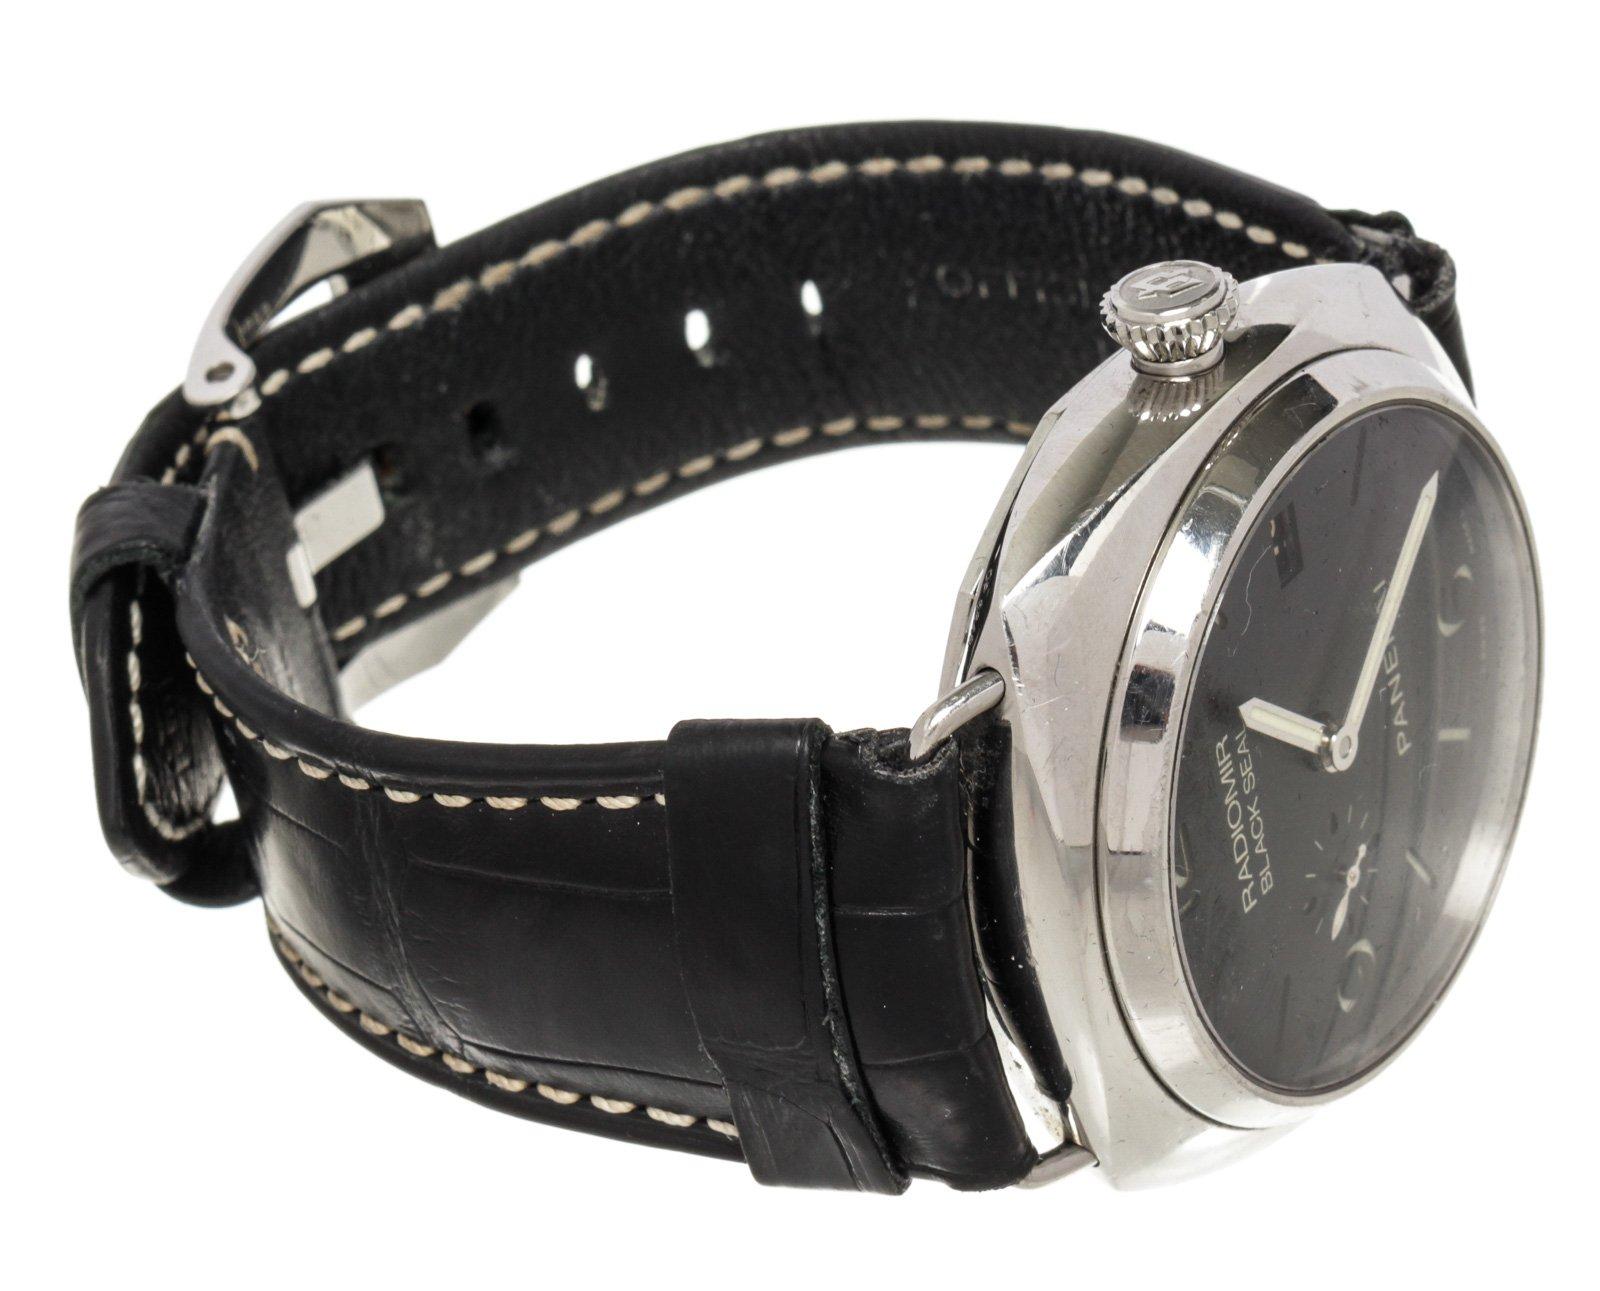 Panerai Black Leather Radiomir Watch with silver-tone hardware.

40137MSC